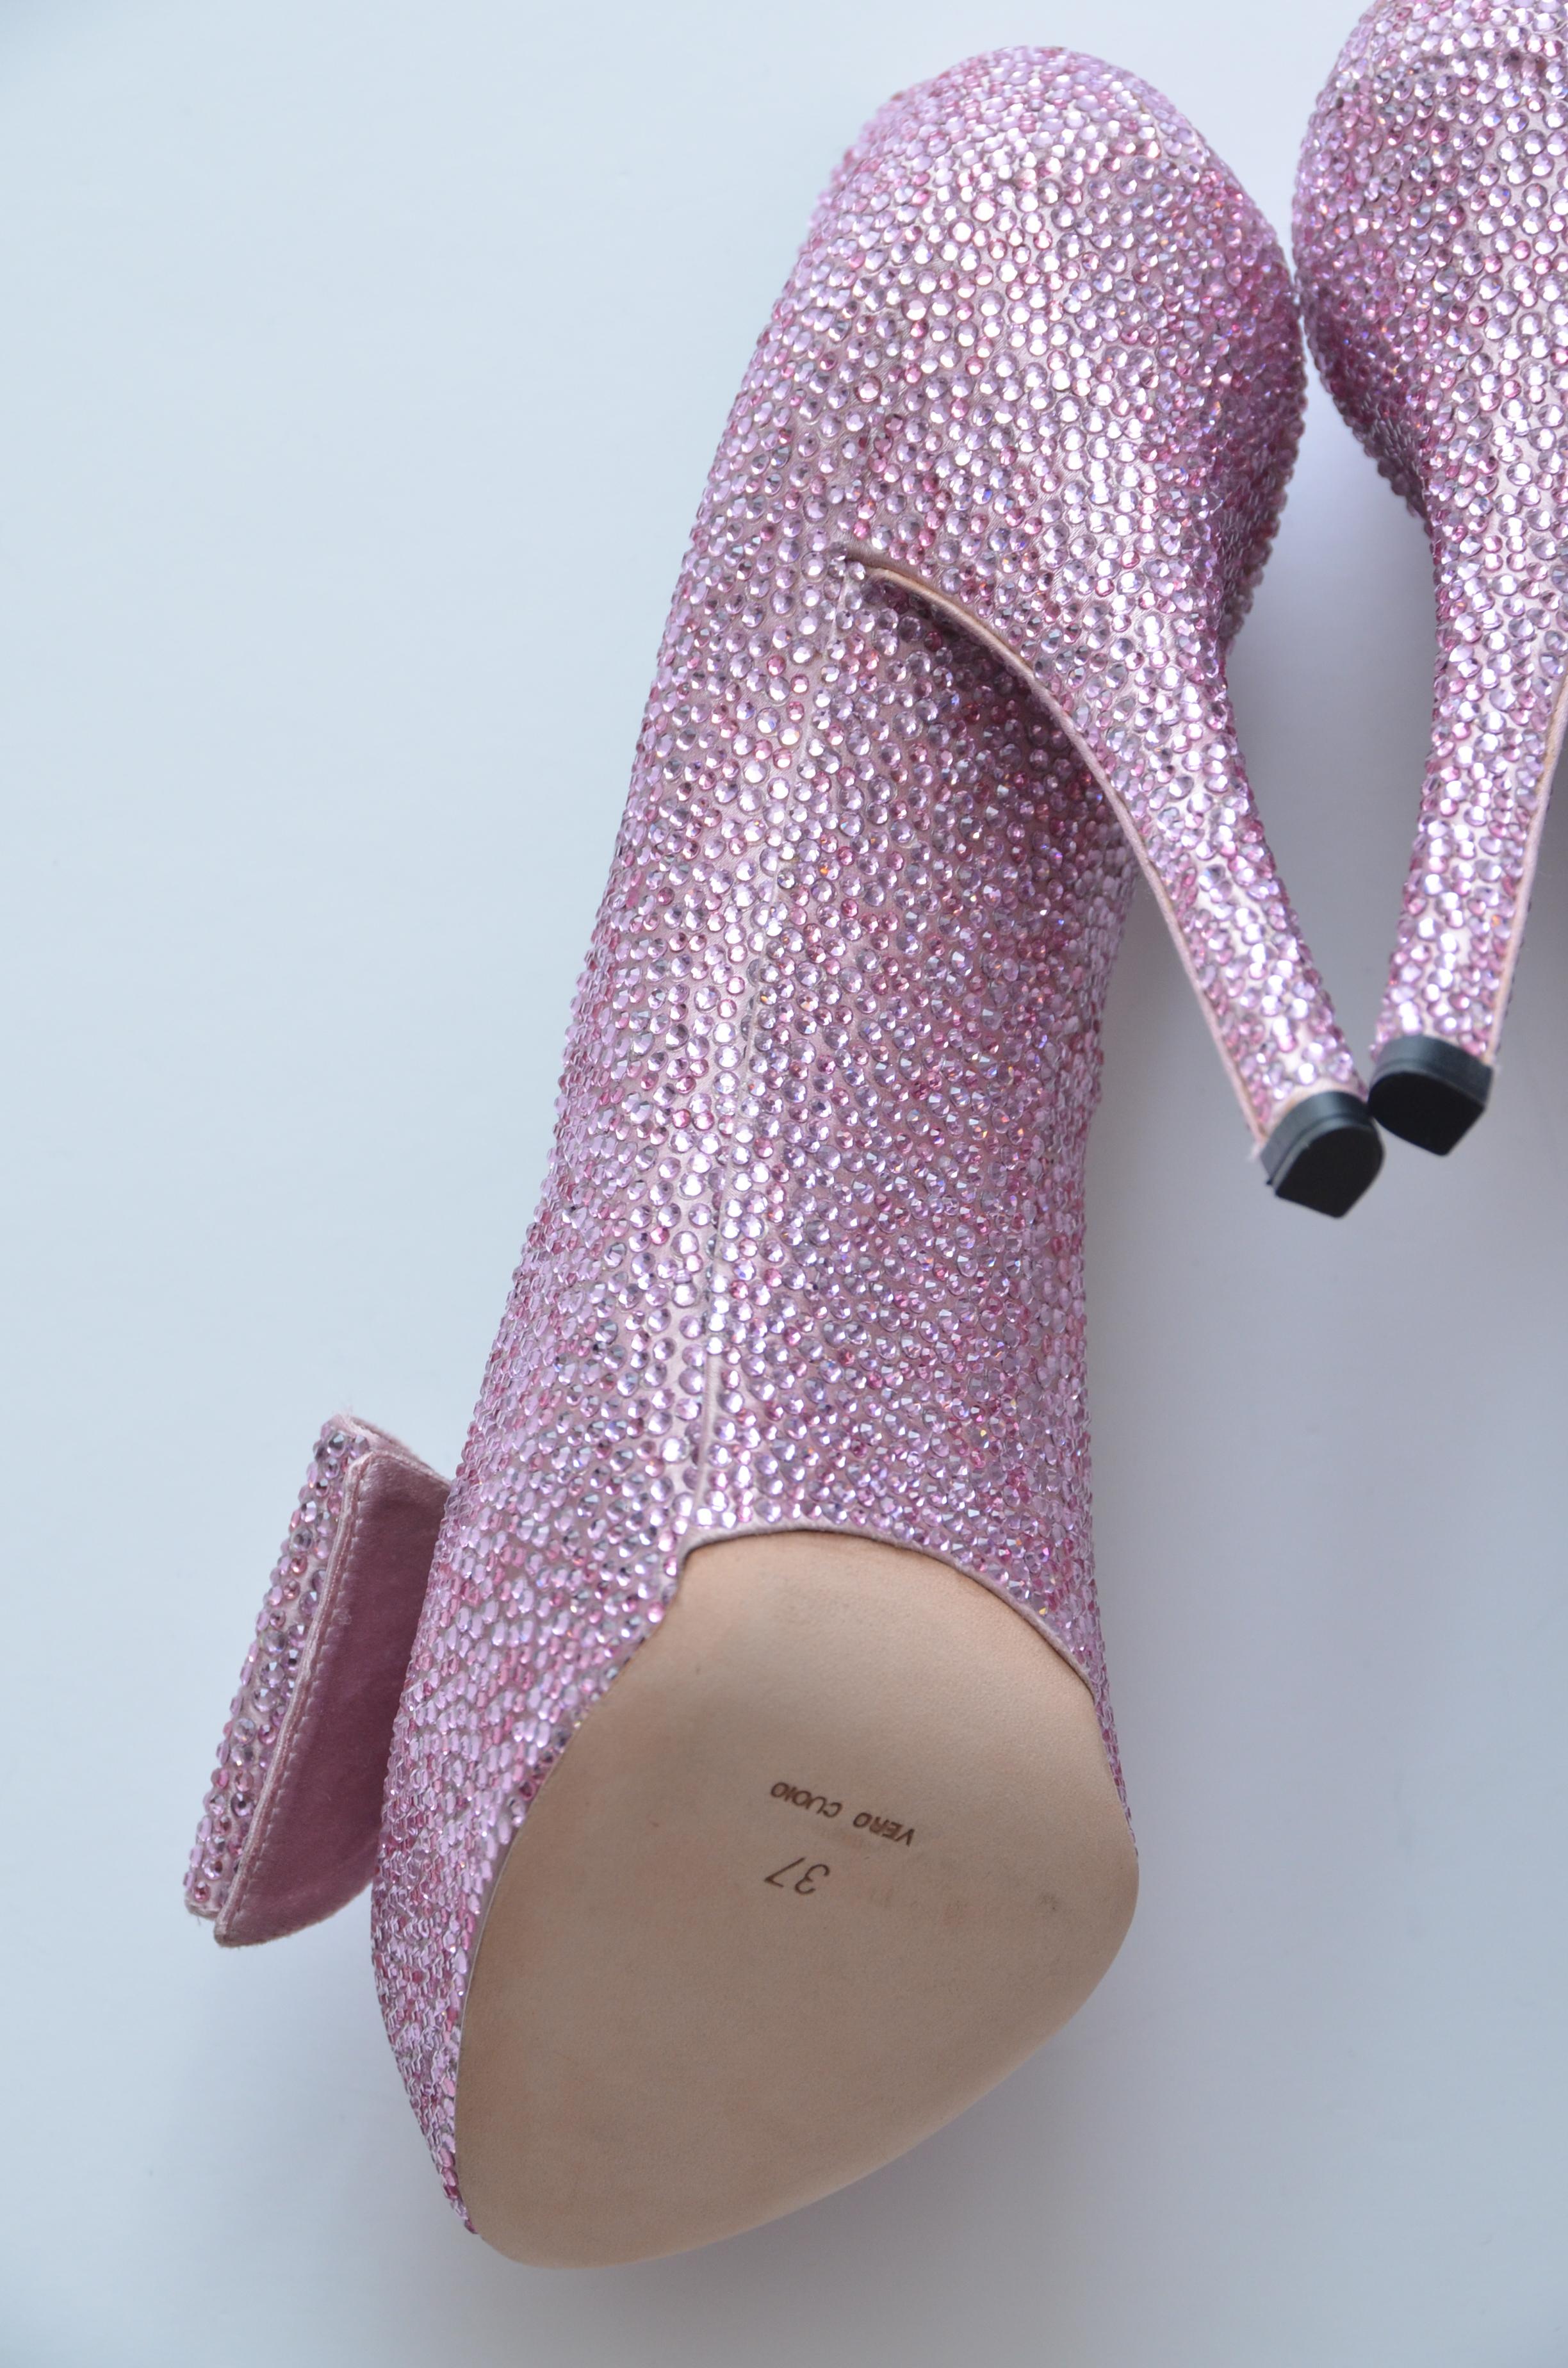 Dolce & Gabbana Swarovski Pink Strass Embellished Shoes 37 NEW   2